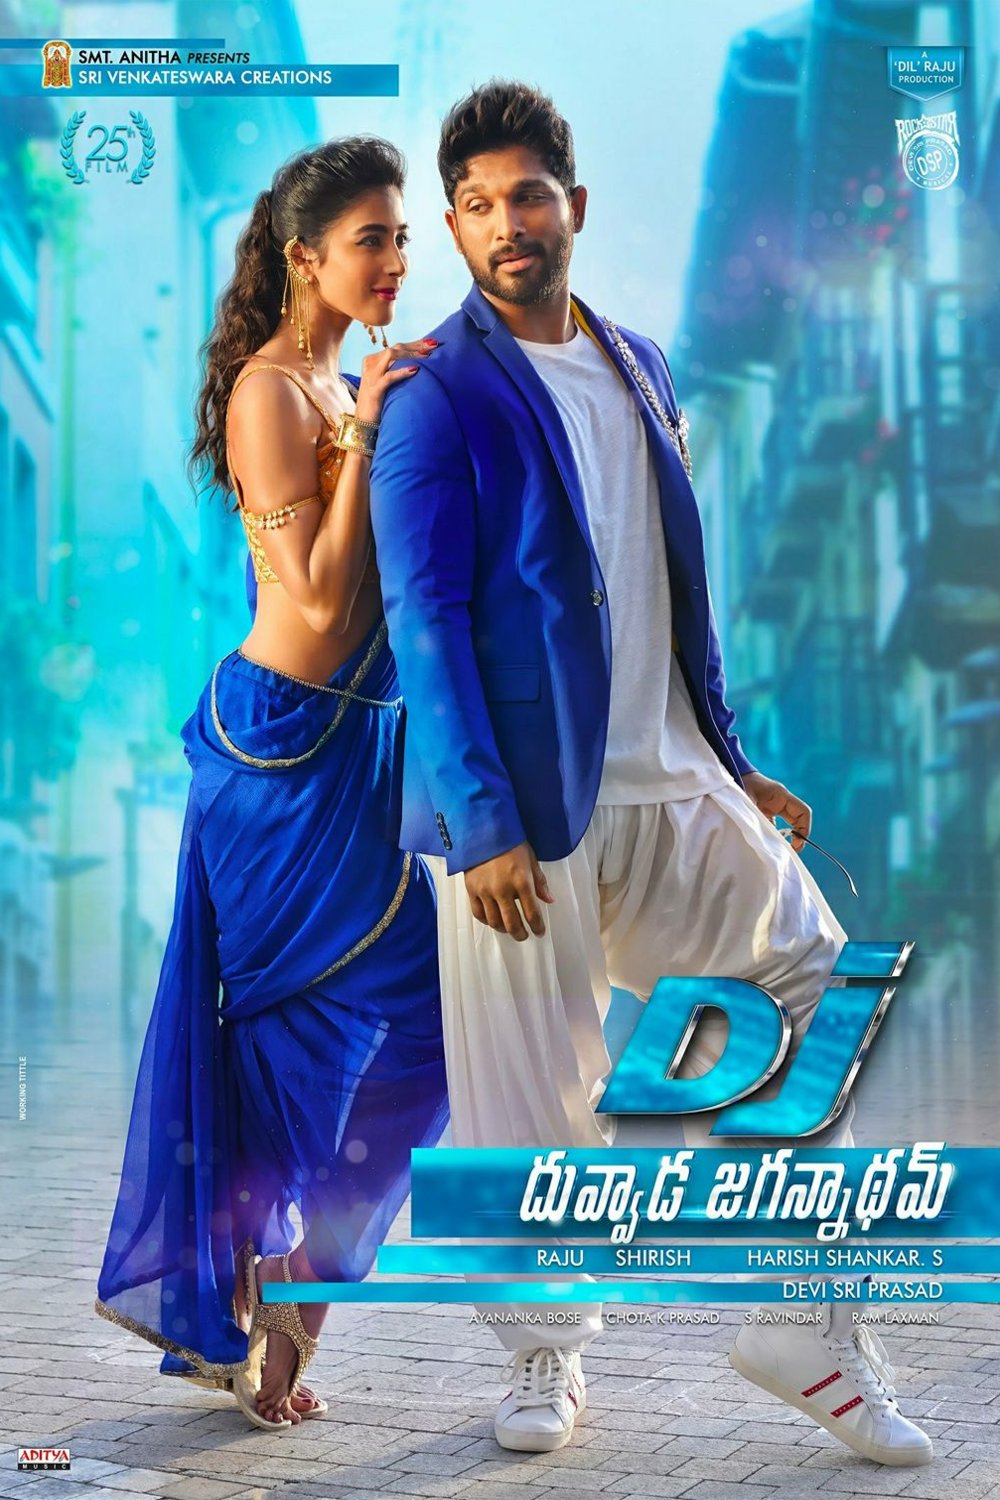 Telugu poster of the movie Duvvada Jagannadham